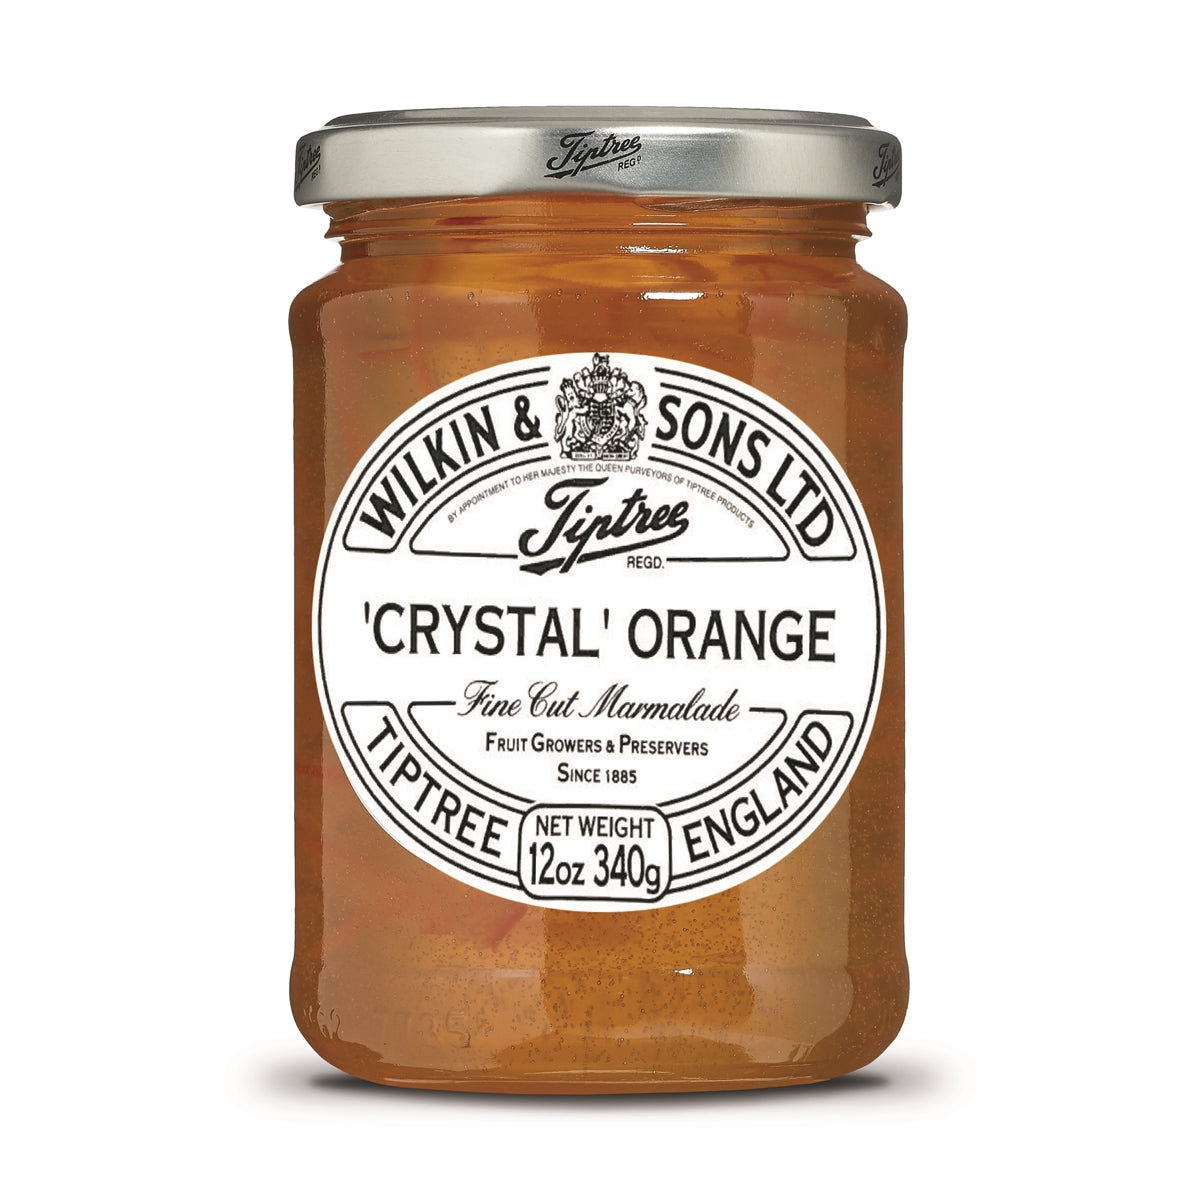 Tiptree Crystal Orange Marmalade 12oz x 6